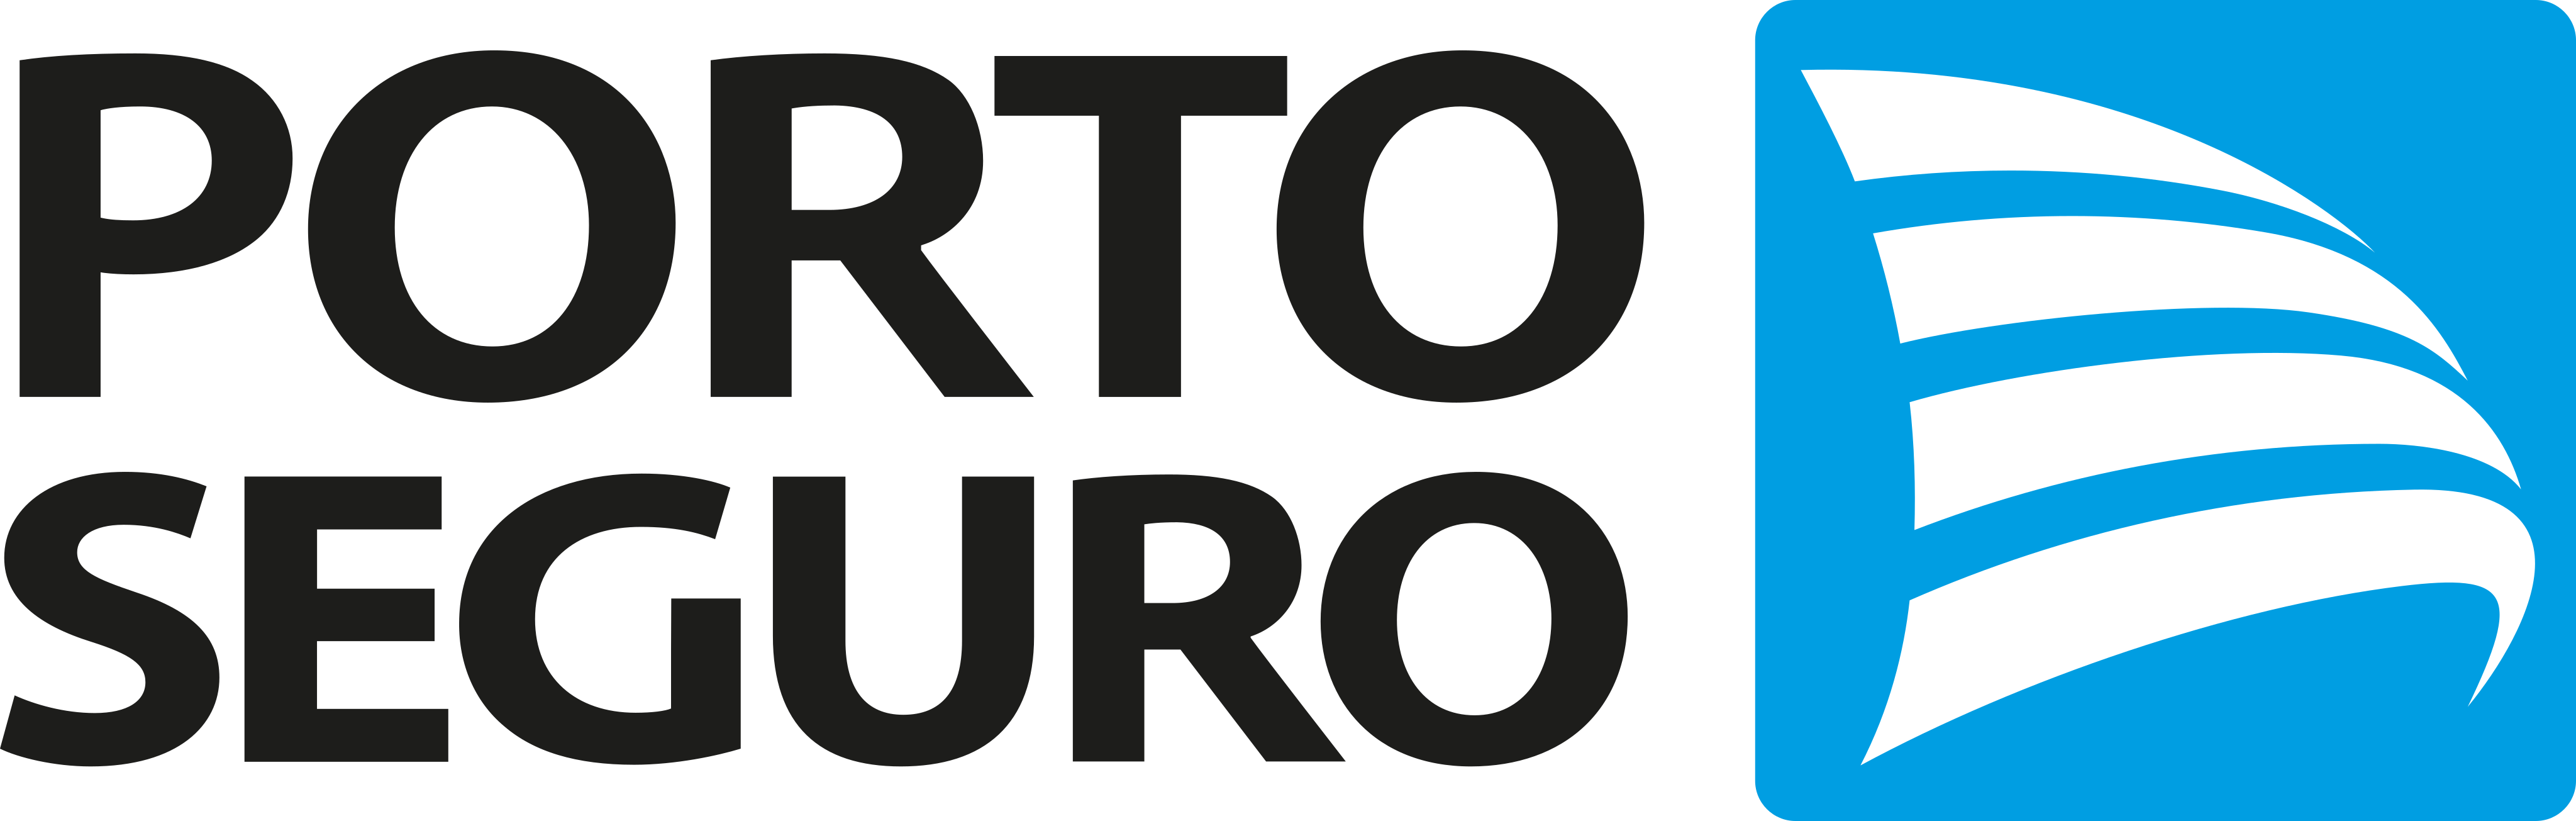 Porto Seguro Logo - PNG e Vetor - Download de Logo